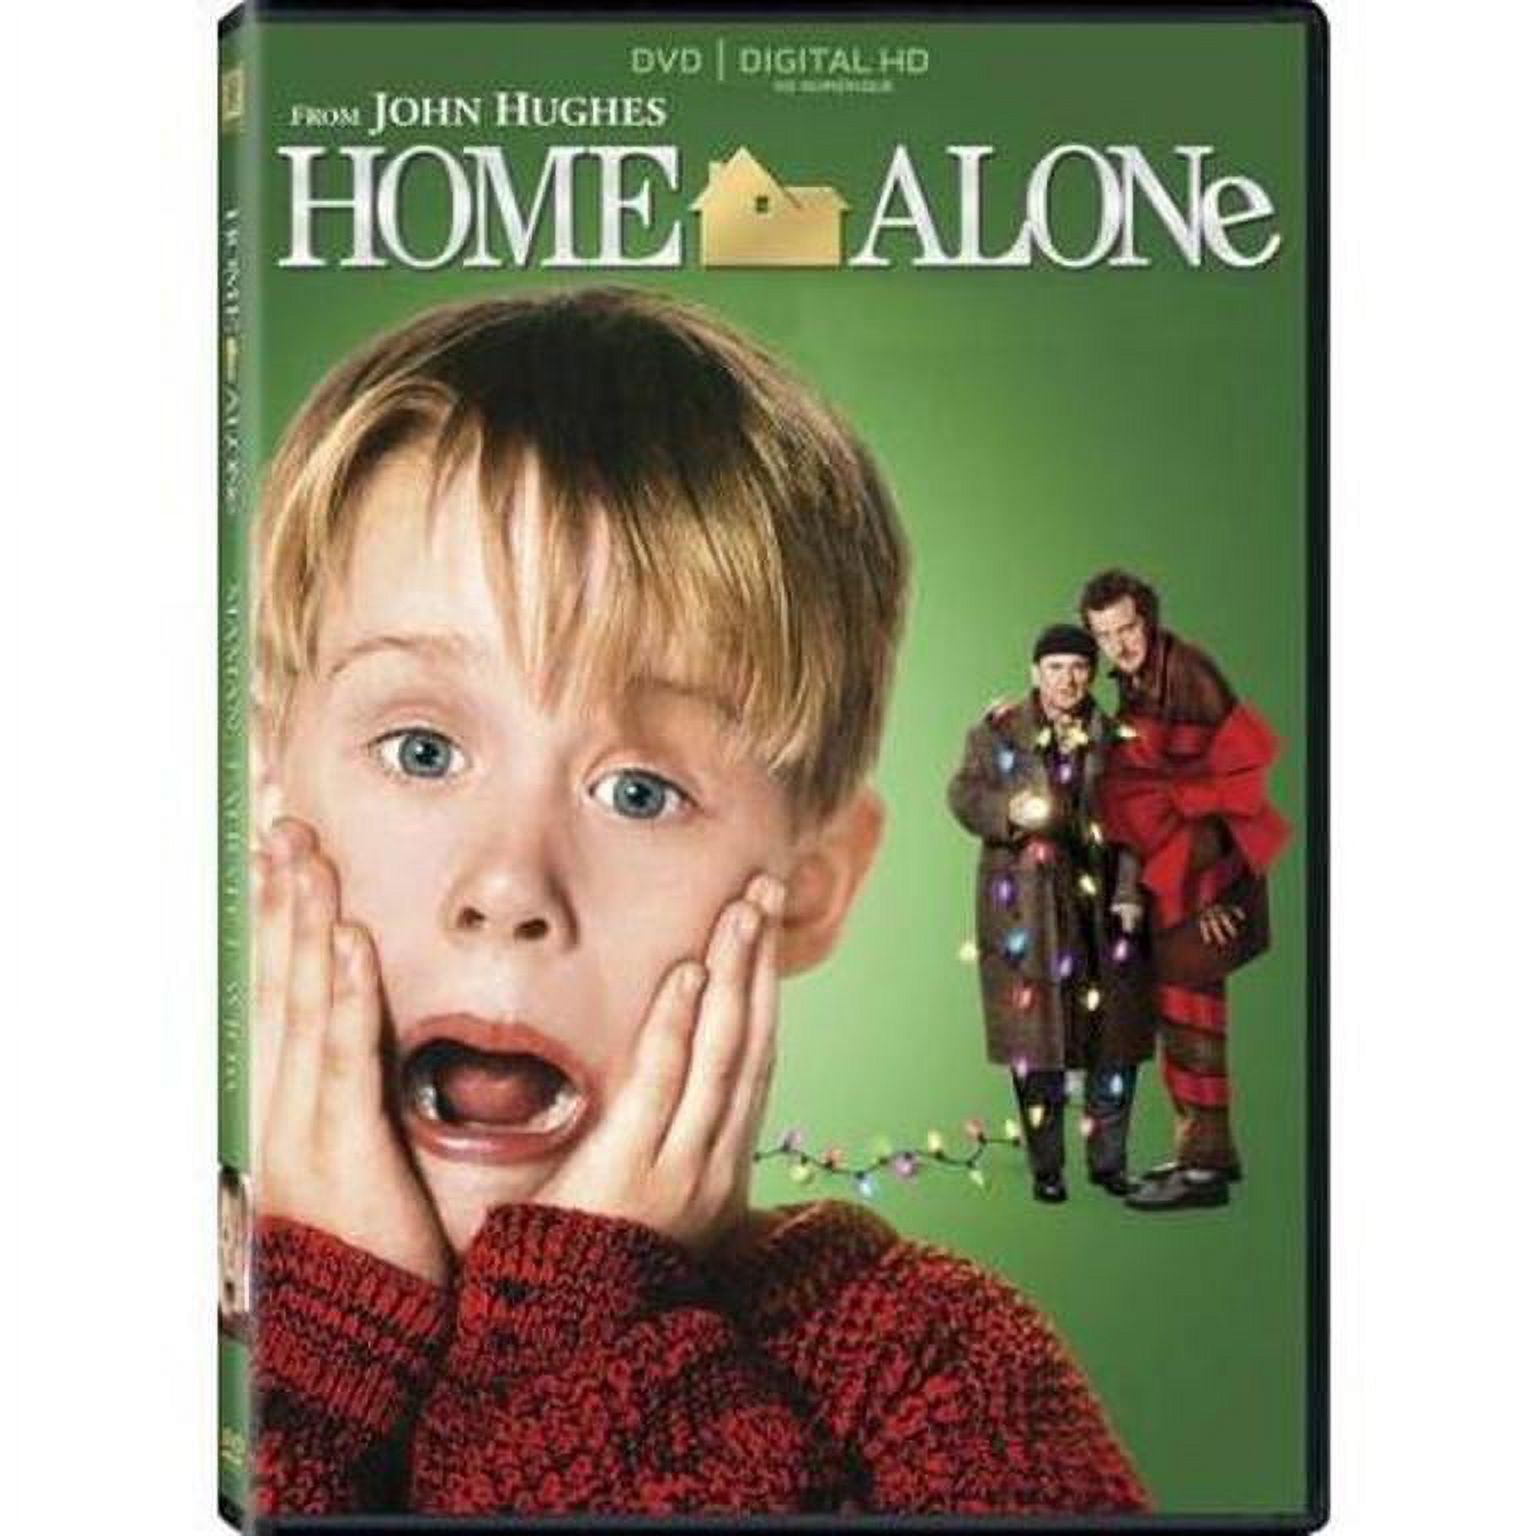 Home Alone (DVD + Digital Code) - image 4 of 4